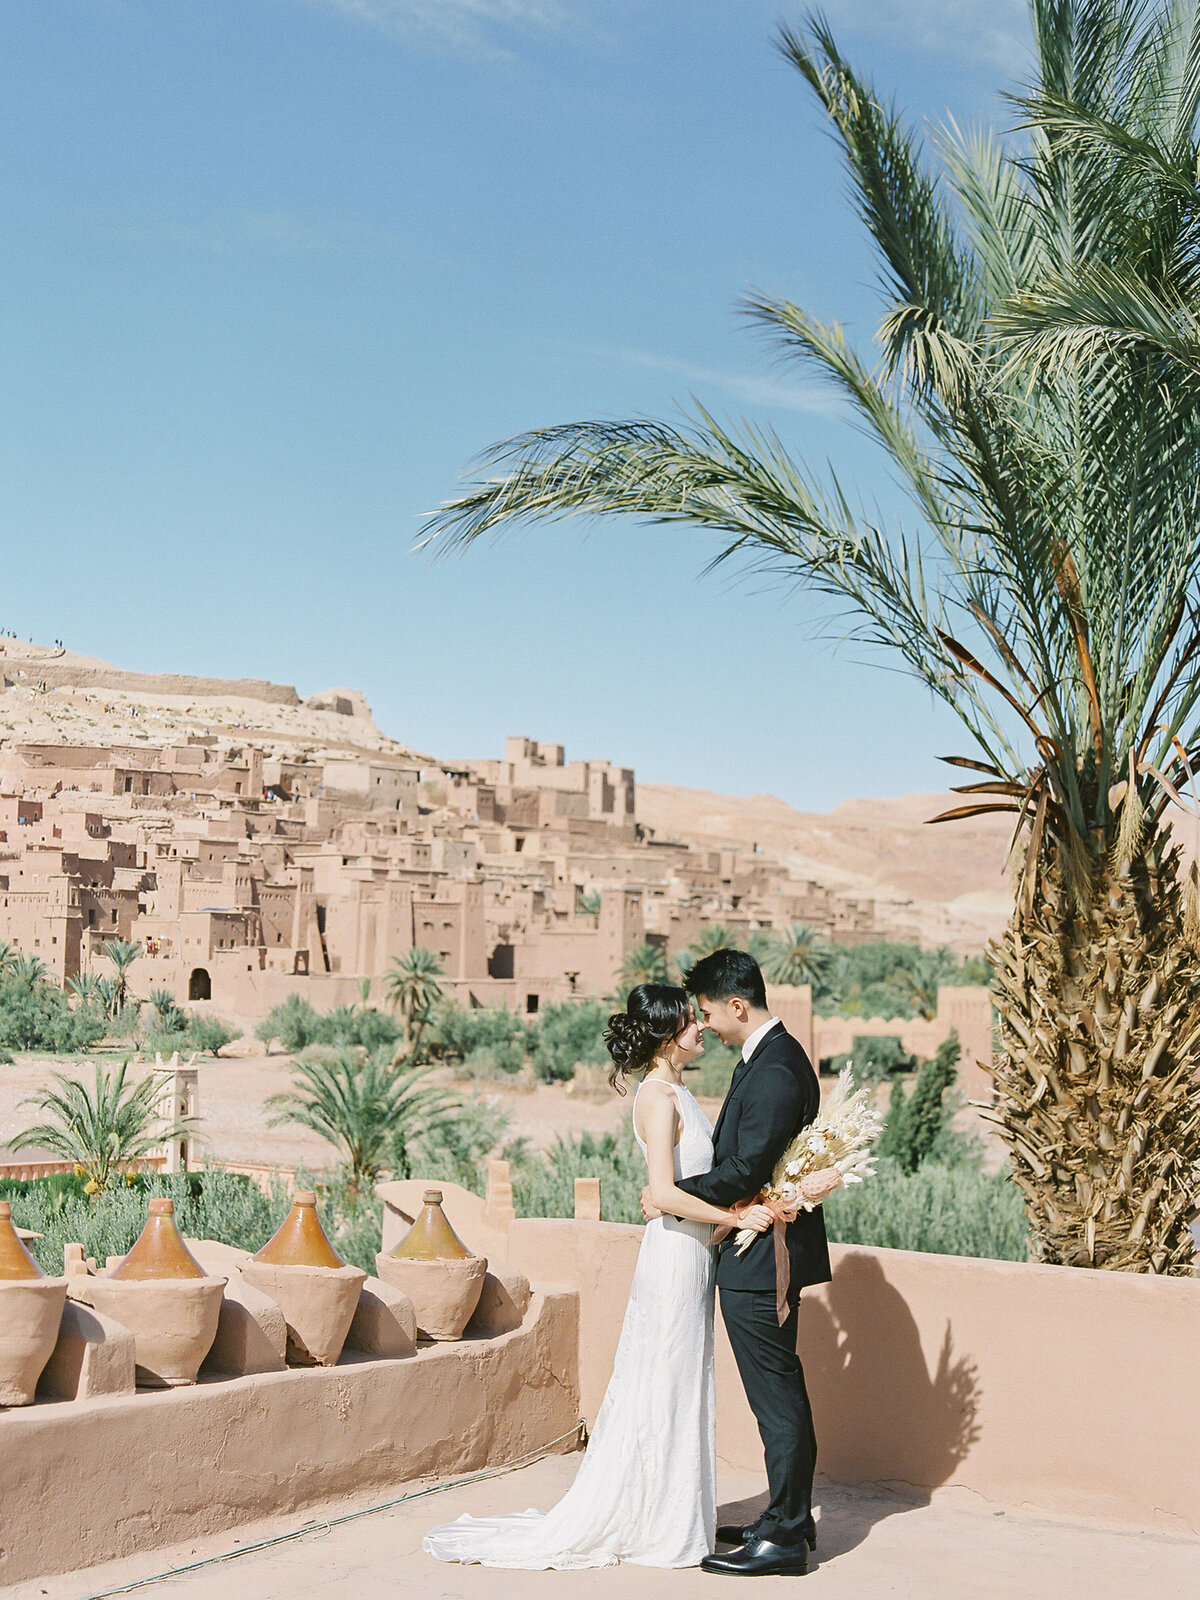 Vicki Grafton Photography Pre Wedding Session Engagement Morocco Sahara Desert Luxury Destination Photographer Fine art Film.jpg16